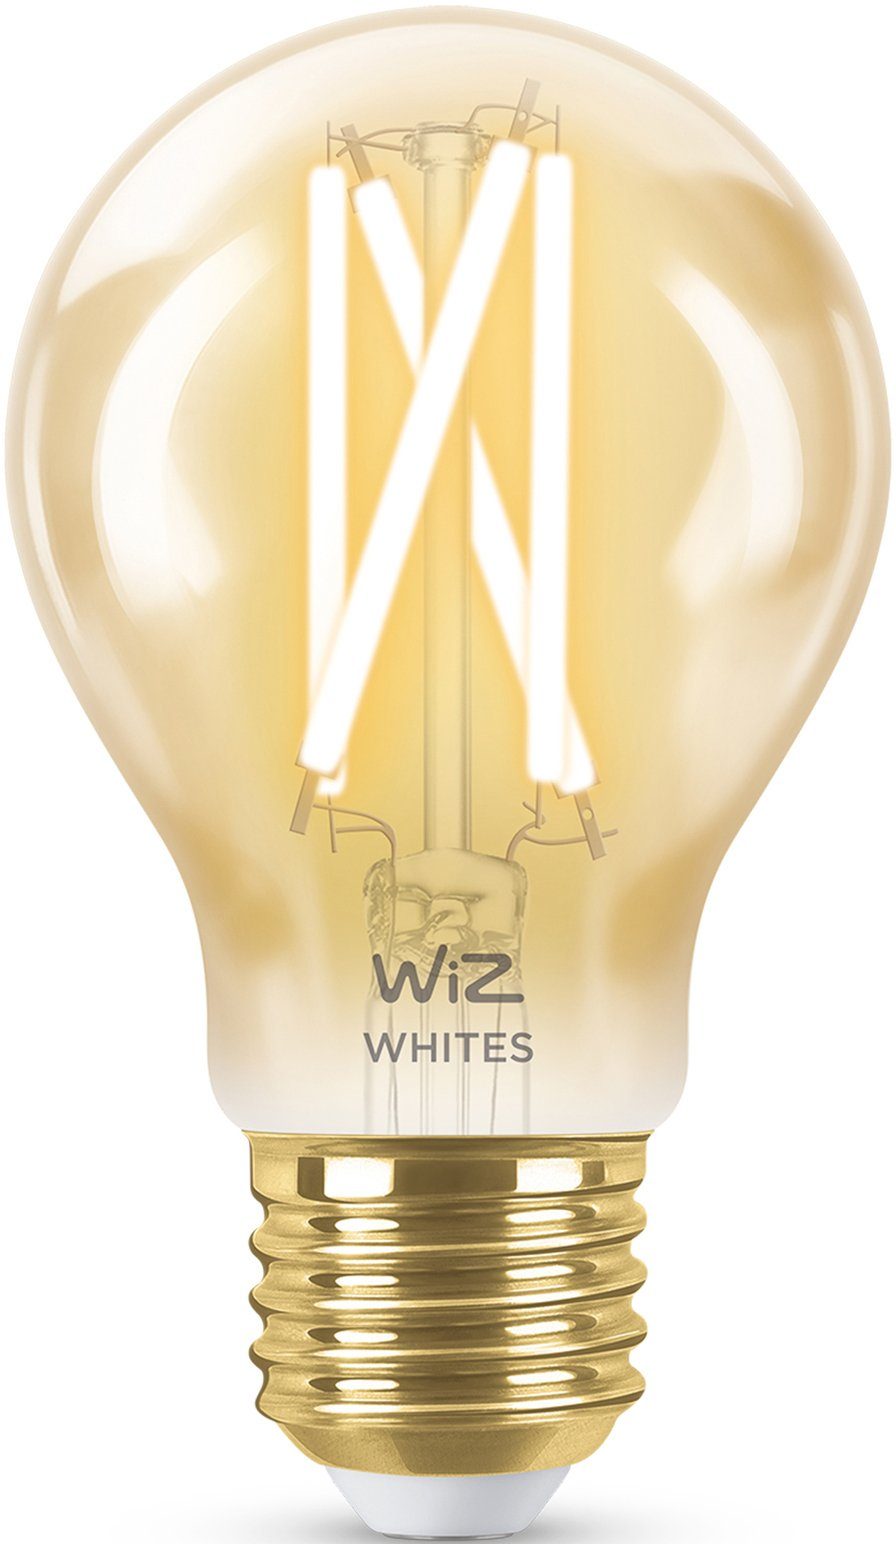 WiZ LED-Filament Filament 50W E27 Standardform Amber Einzelpack, E27, 1 St., Warmweiß, Wiz Tunable White Filament LED Lampen für klassisches Vintage-Design | Filament Leuchtmittel